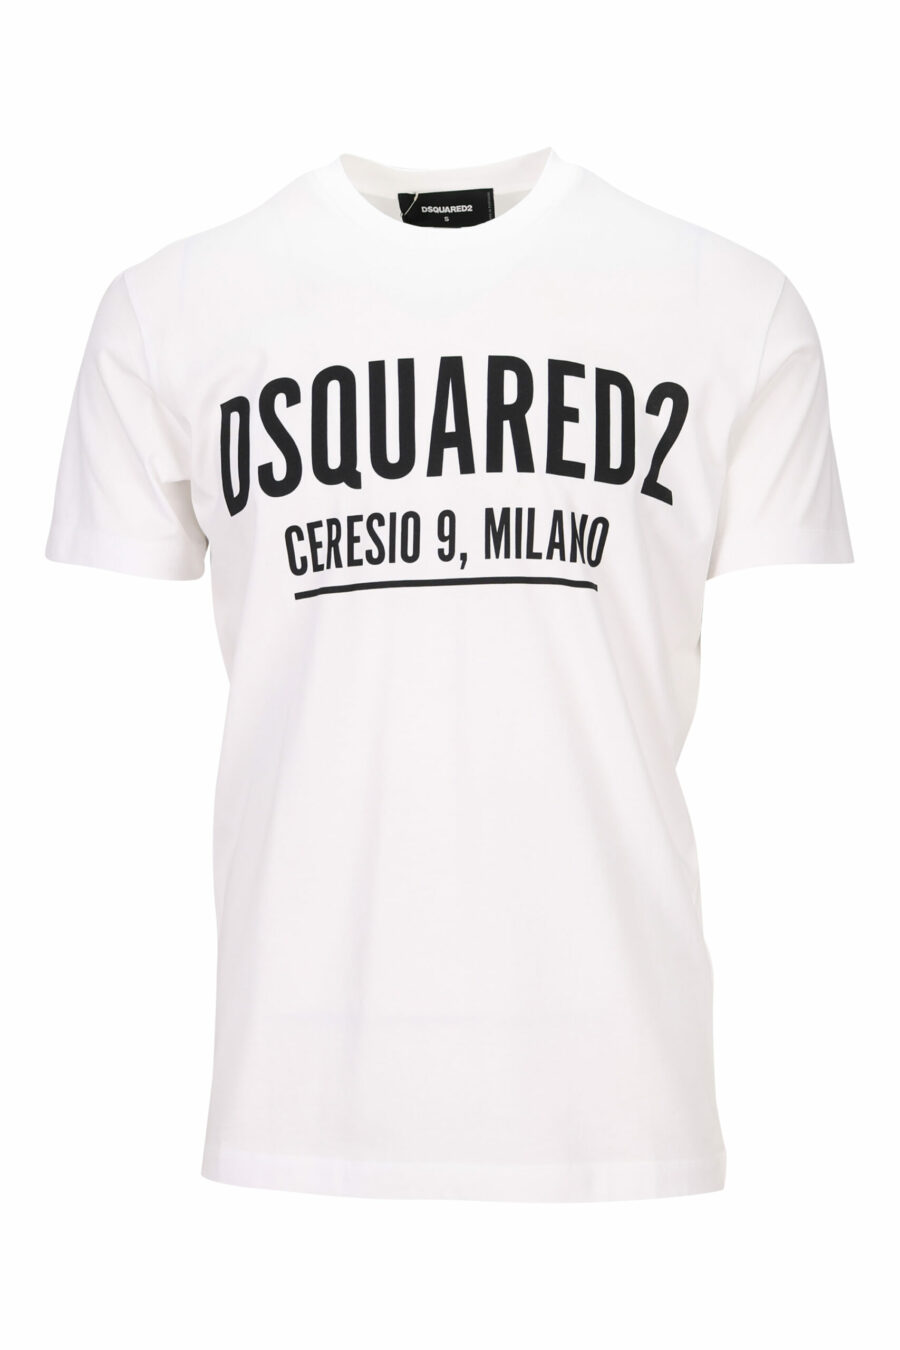 Camiseta blanca con maxilogo "ceresio 9, milano" - 8054148504779 scaled